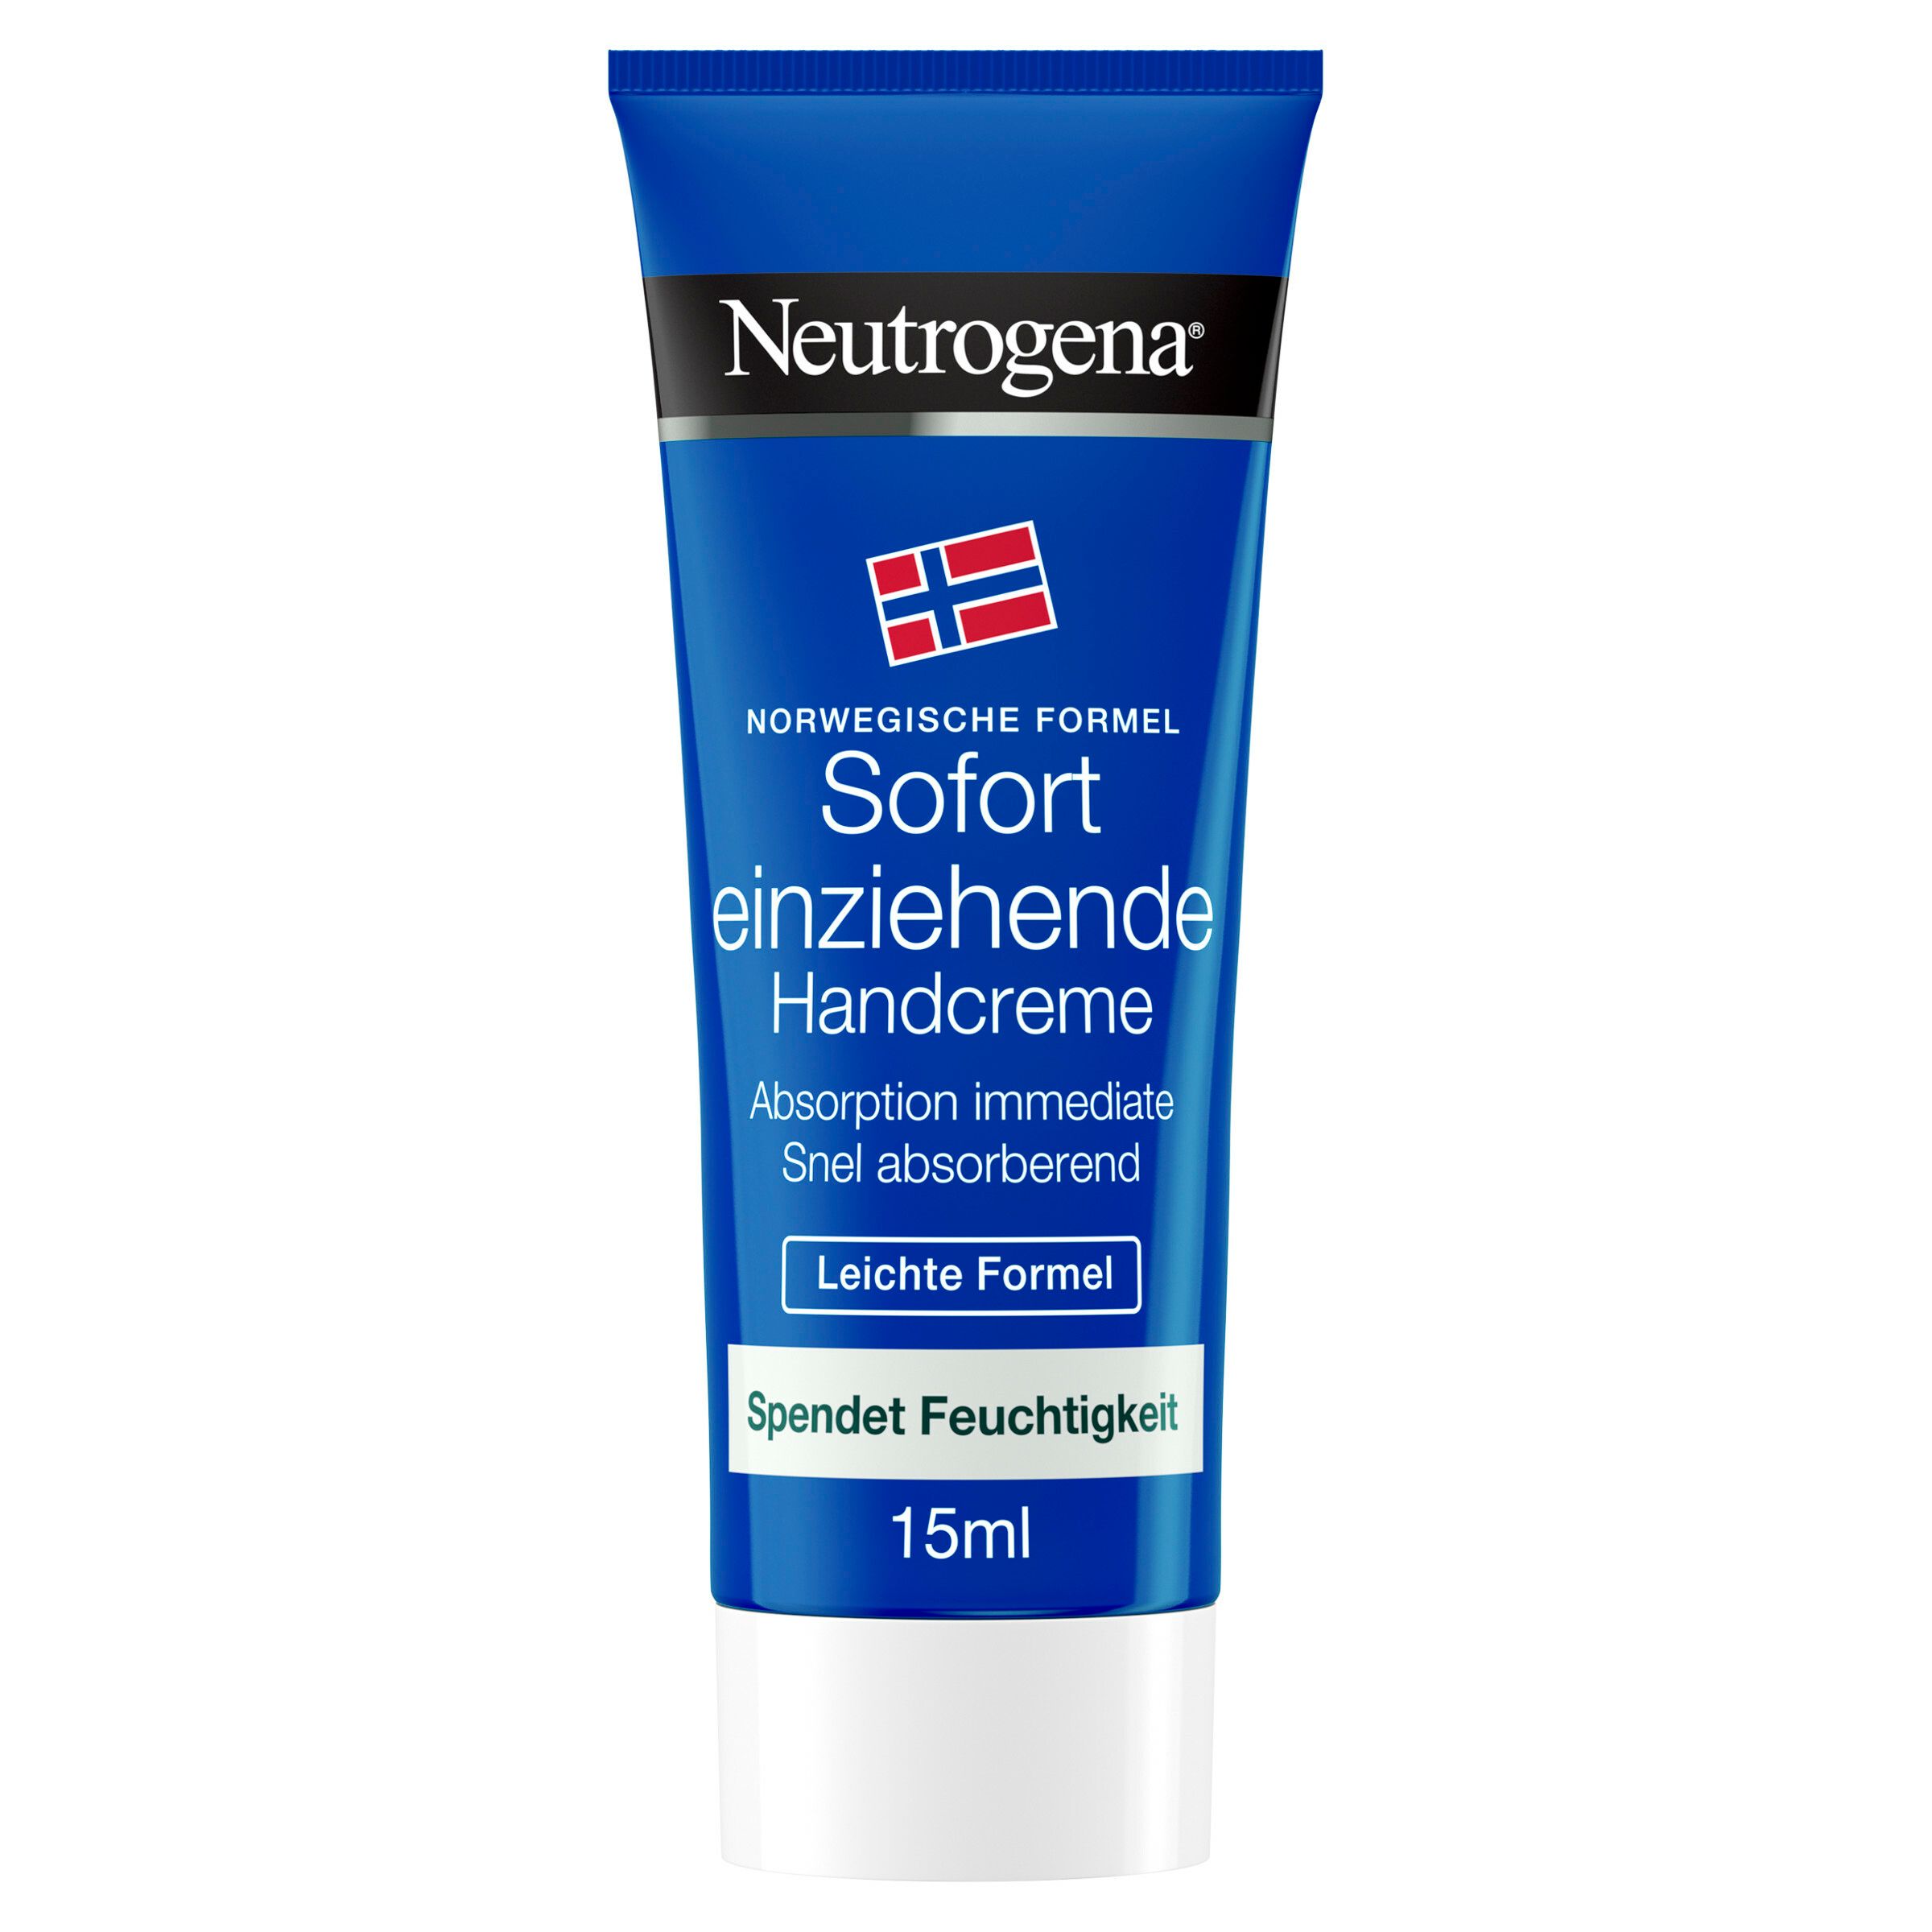 Neutrogena® Norwegische Formel Sofort einziehende Handcreme thumbnail